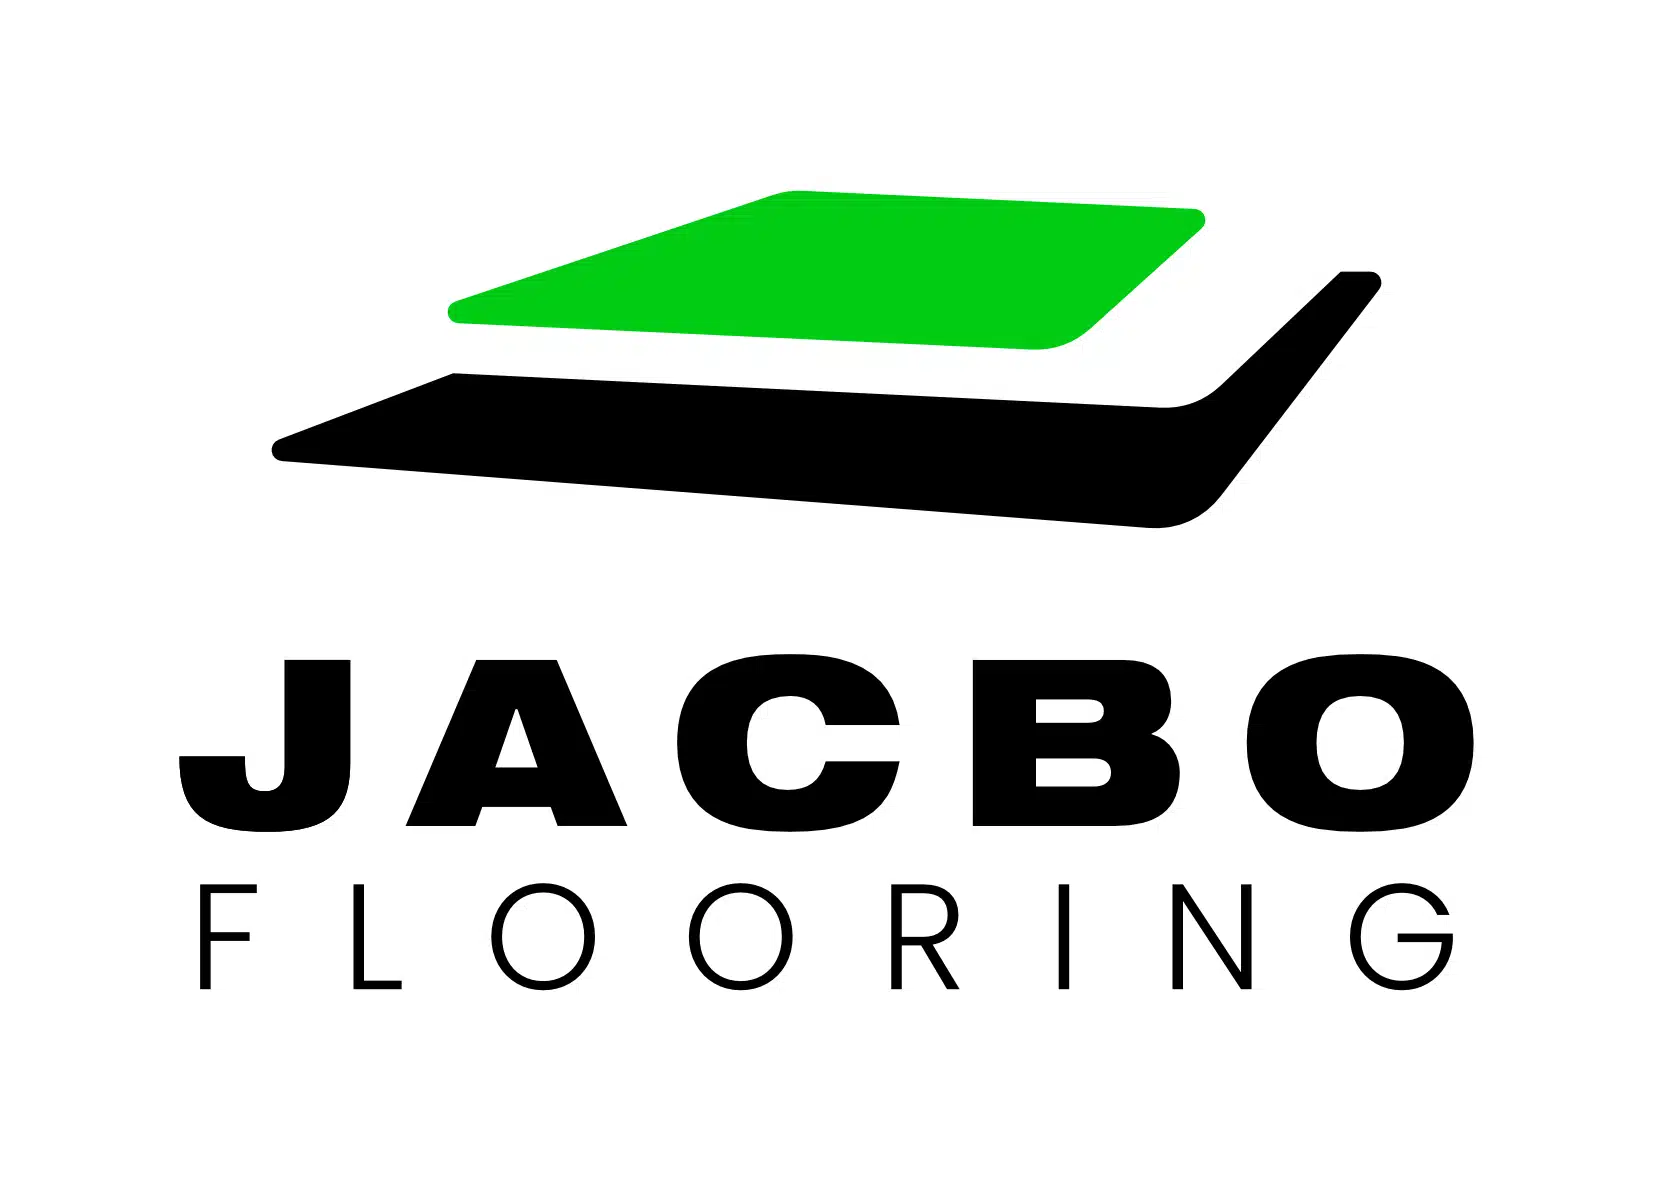 JACBO Flooring GmbH